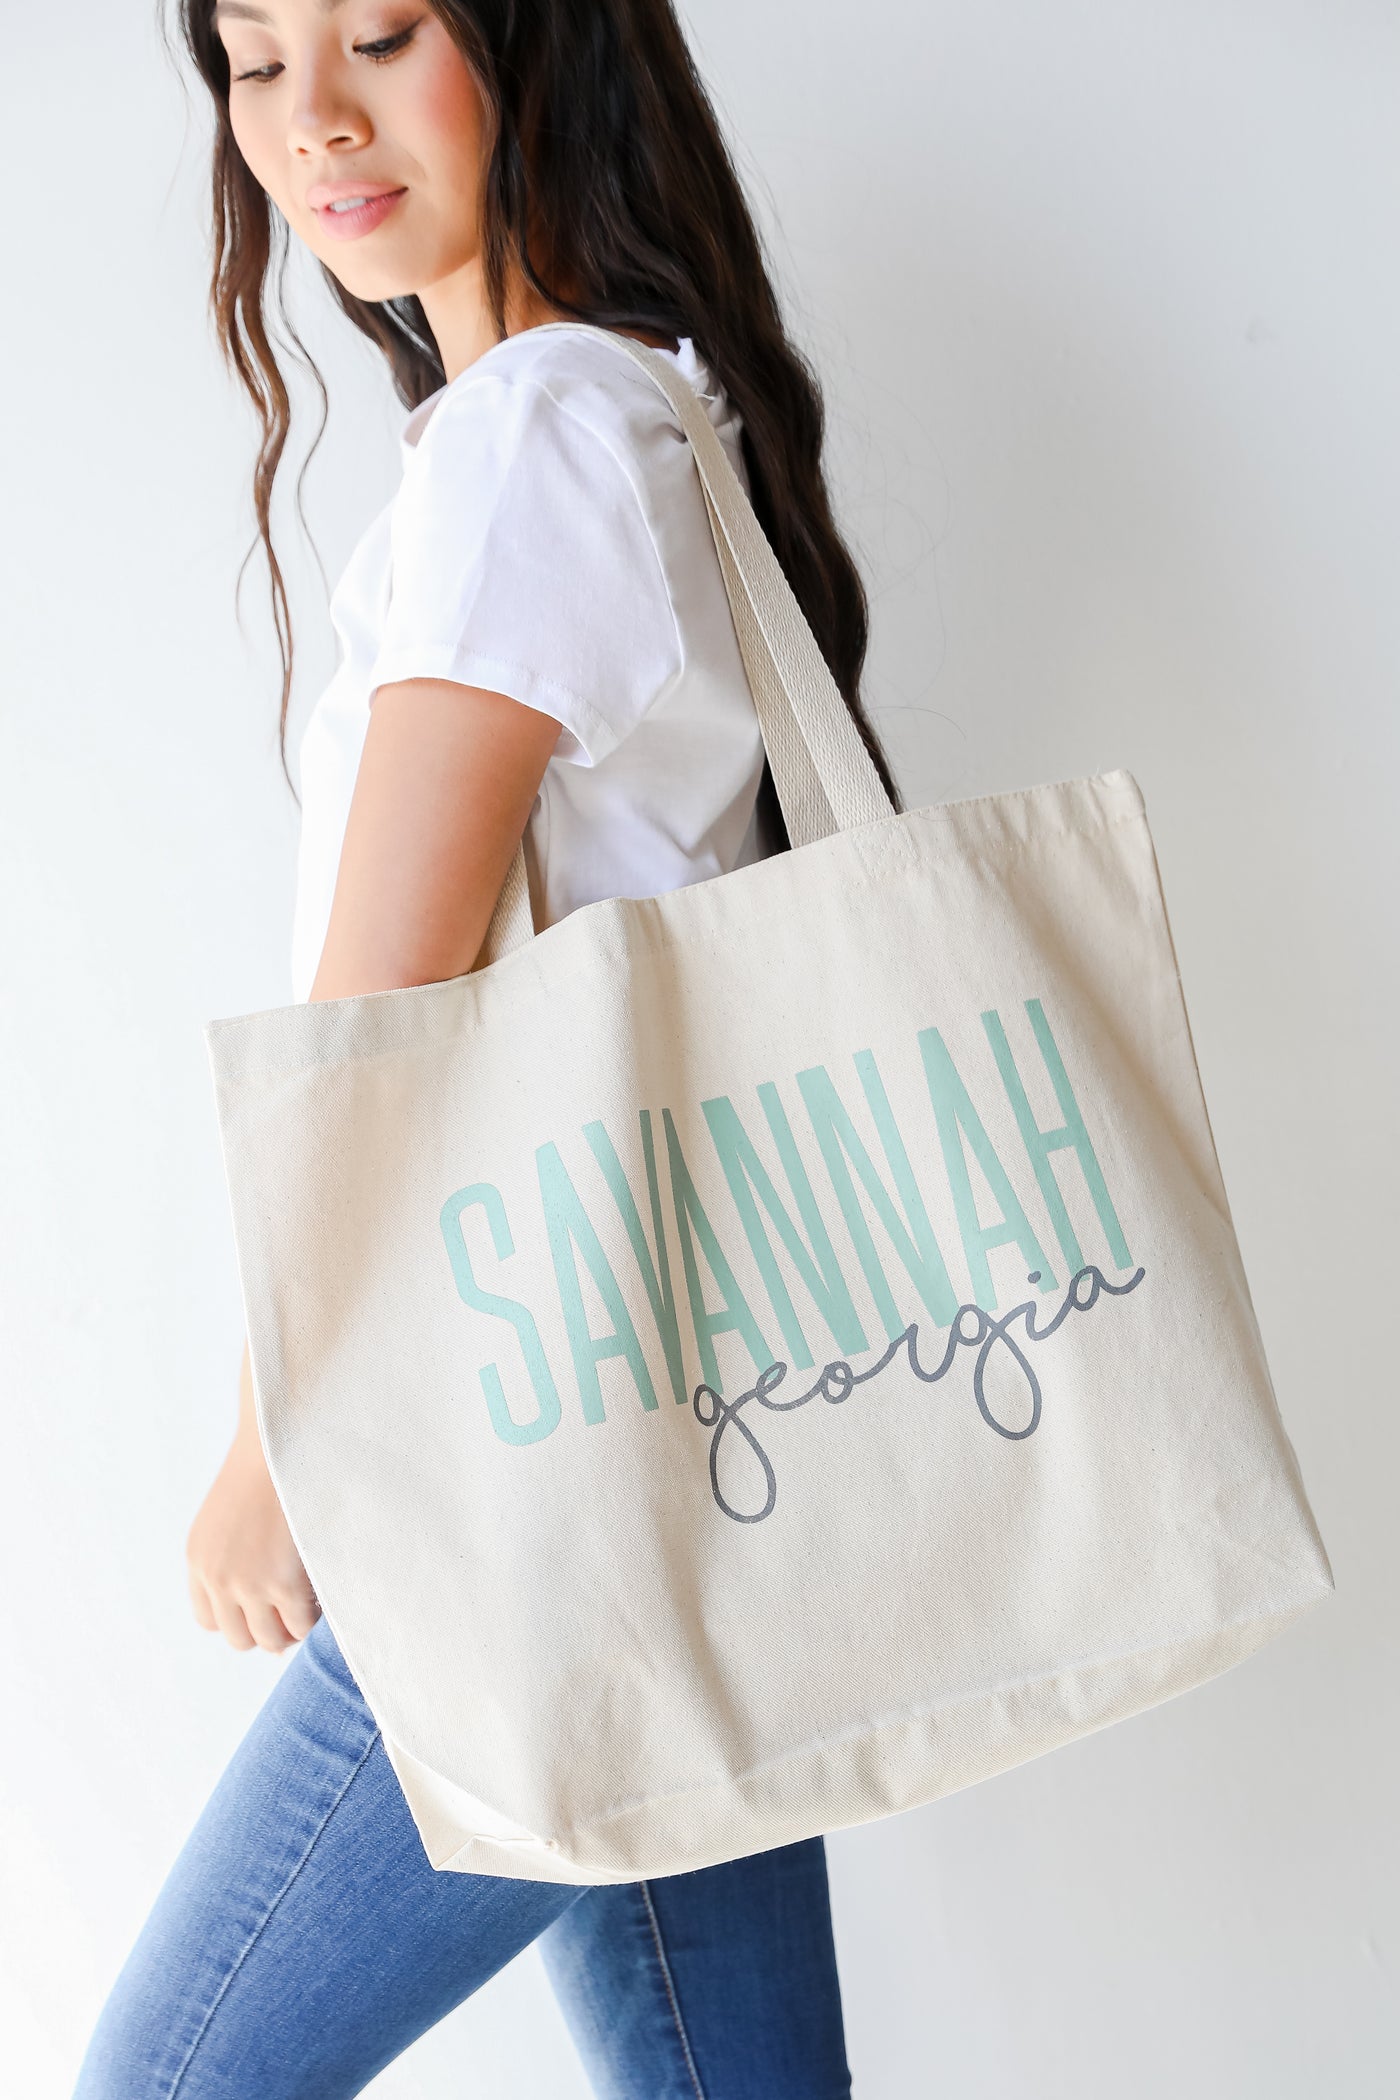 Savannah Georgia Script Large Tote Bag on model